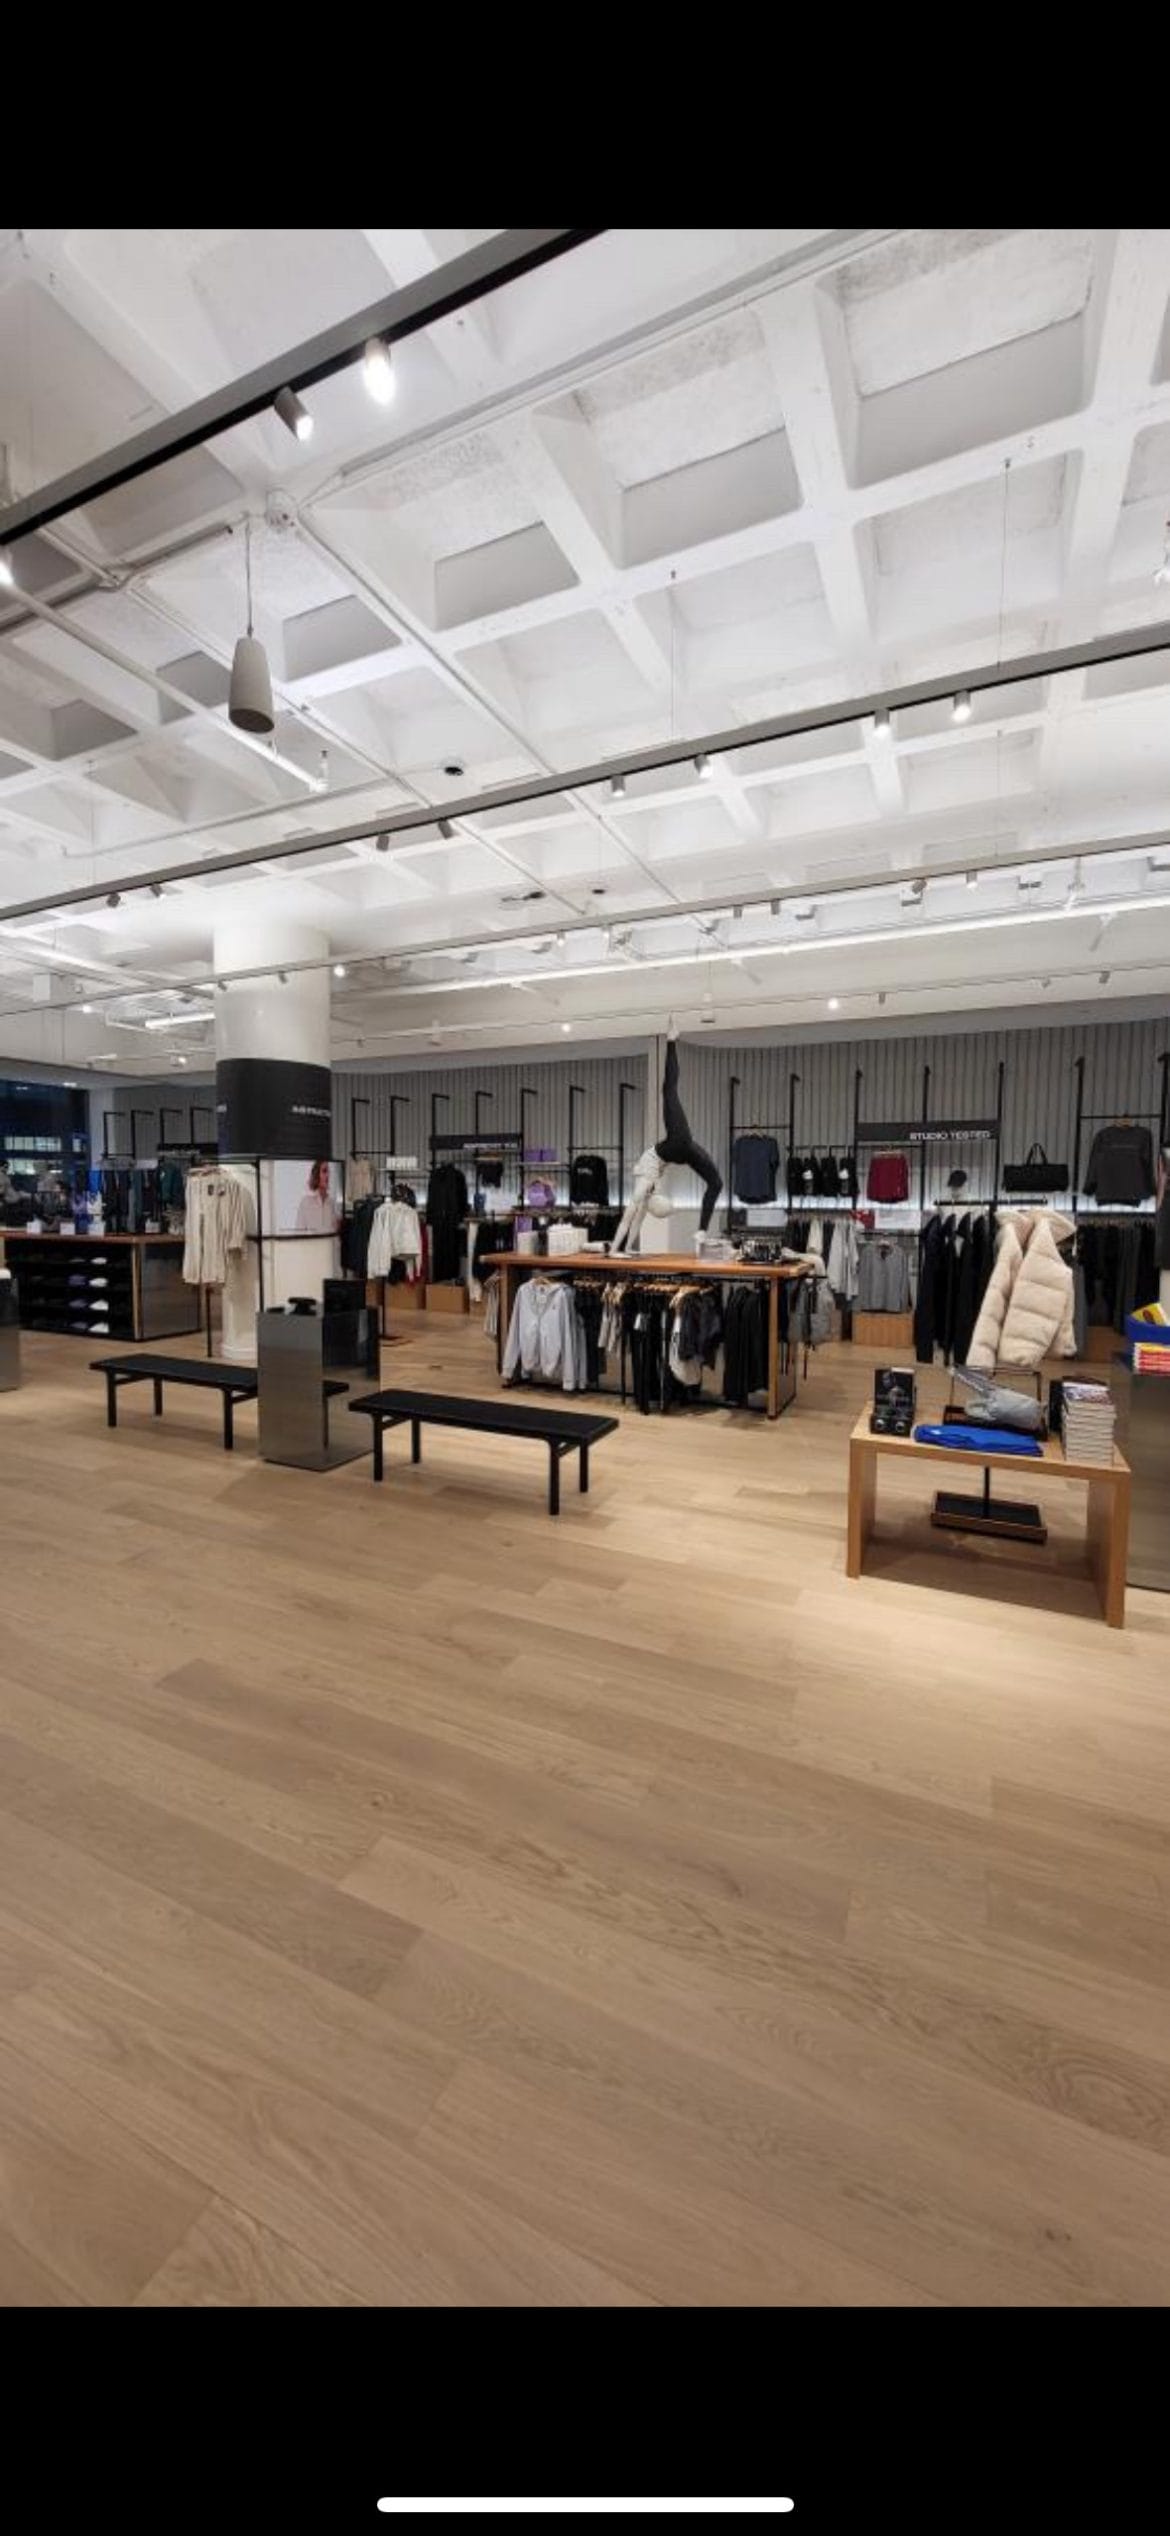 New retail store area at Peloton Studios New York (PSNY). Image credit @wickedsmahtzone.